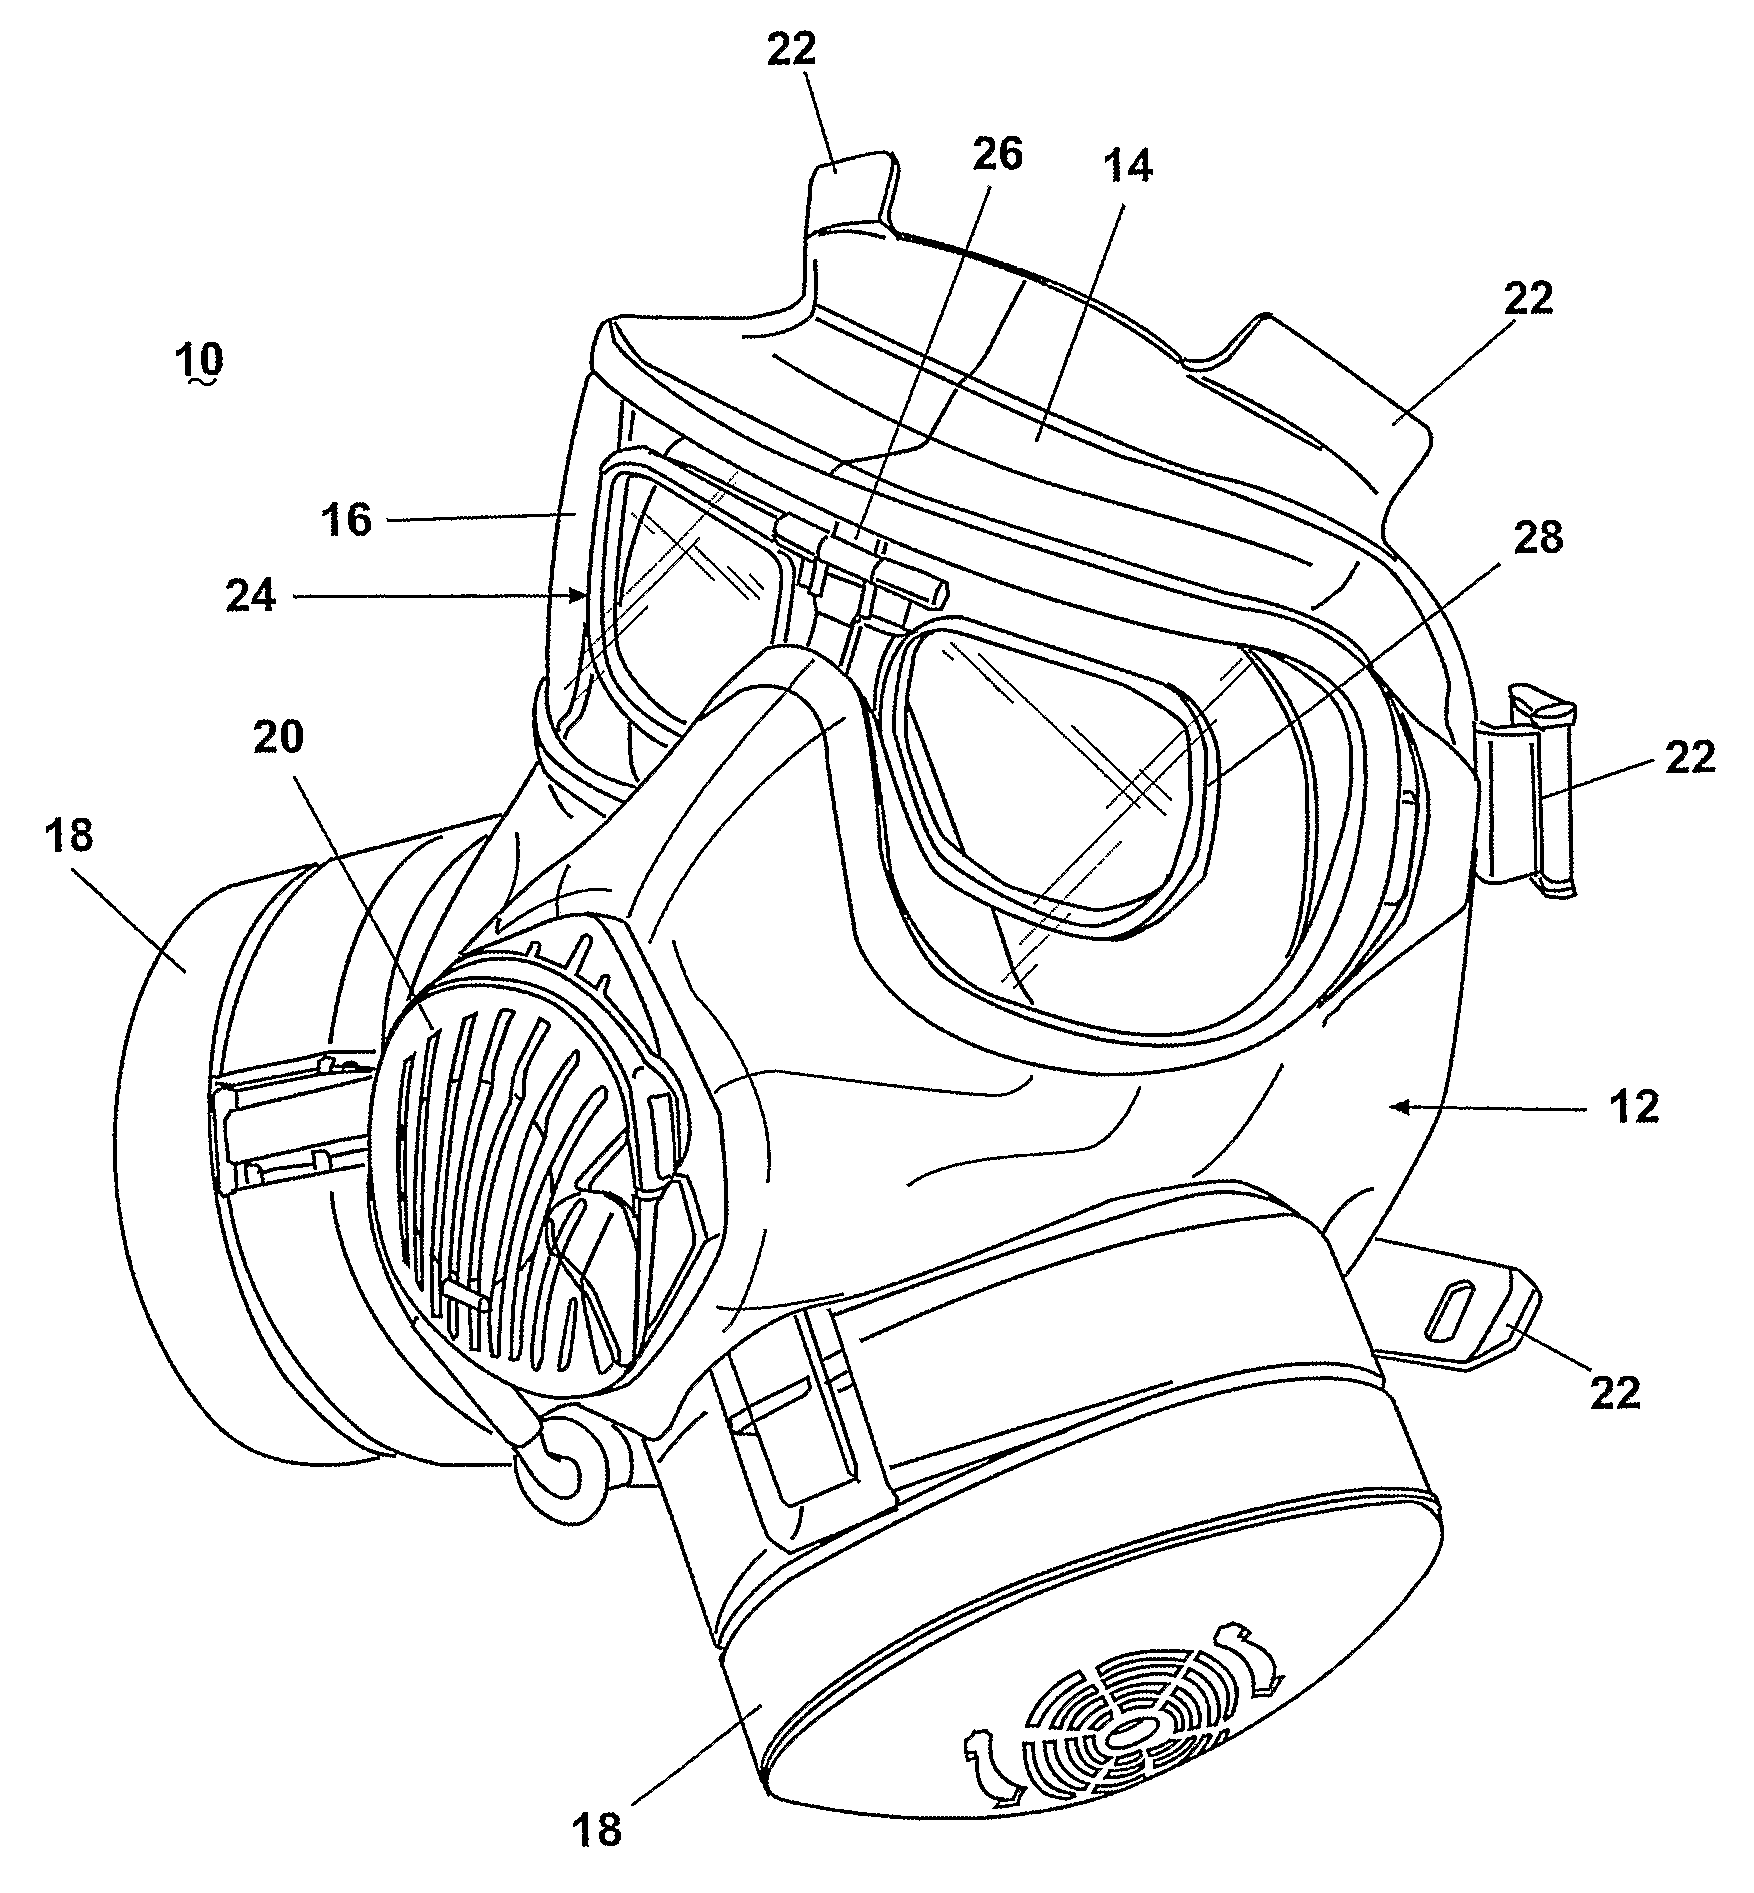 Respirator Mask with Corrective Lens Frame Assemble